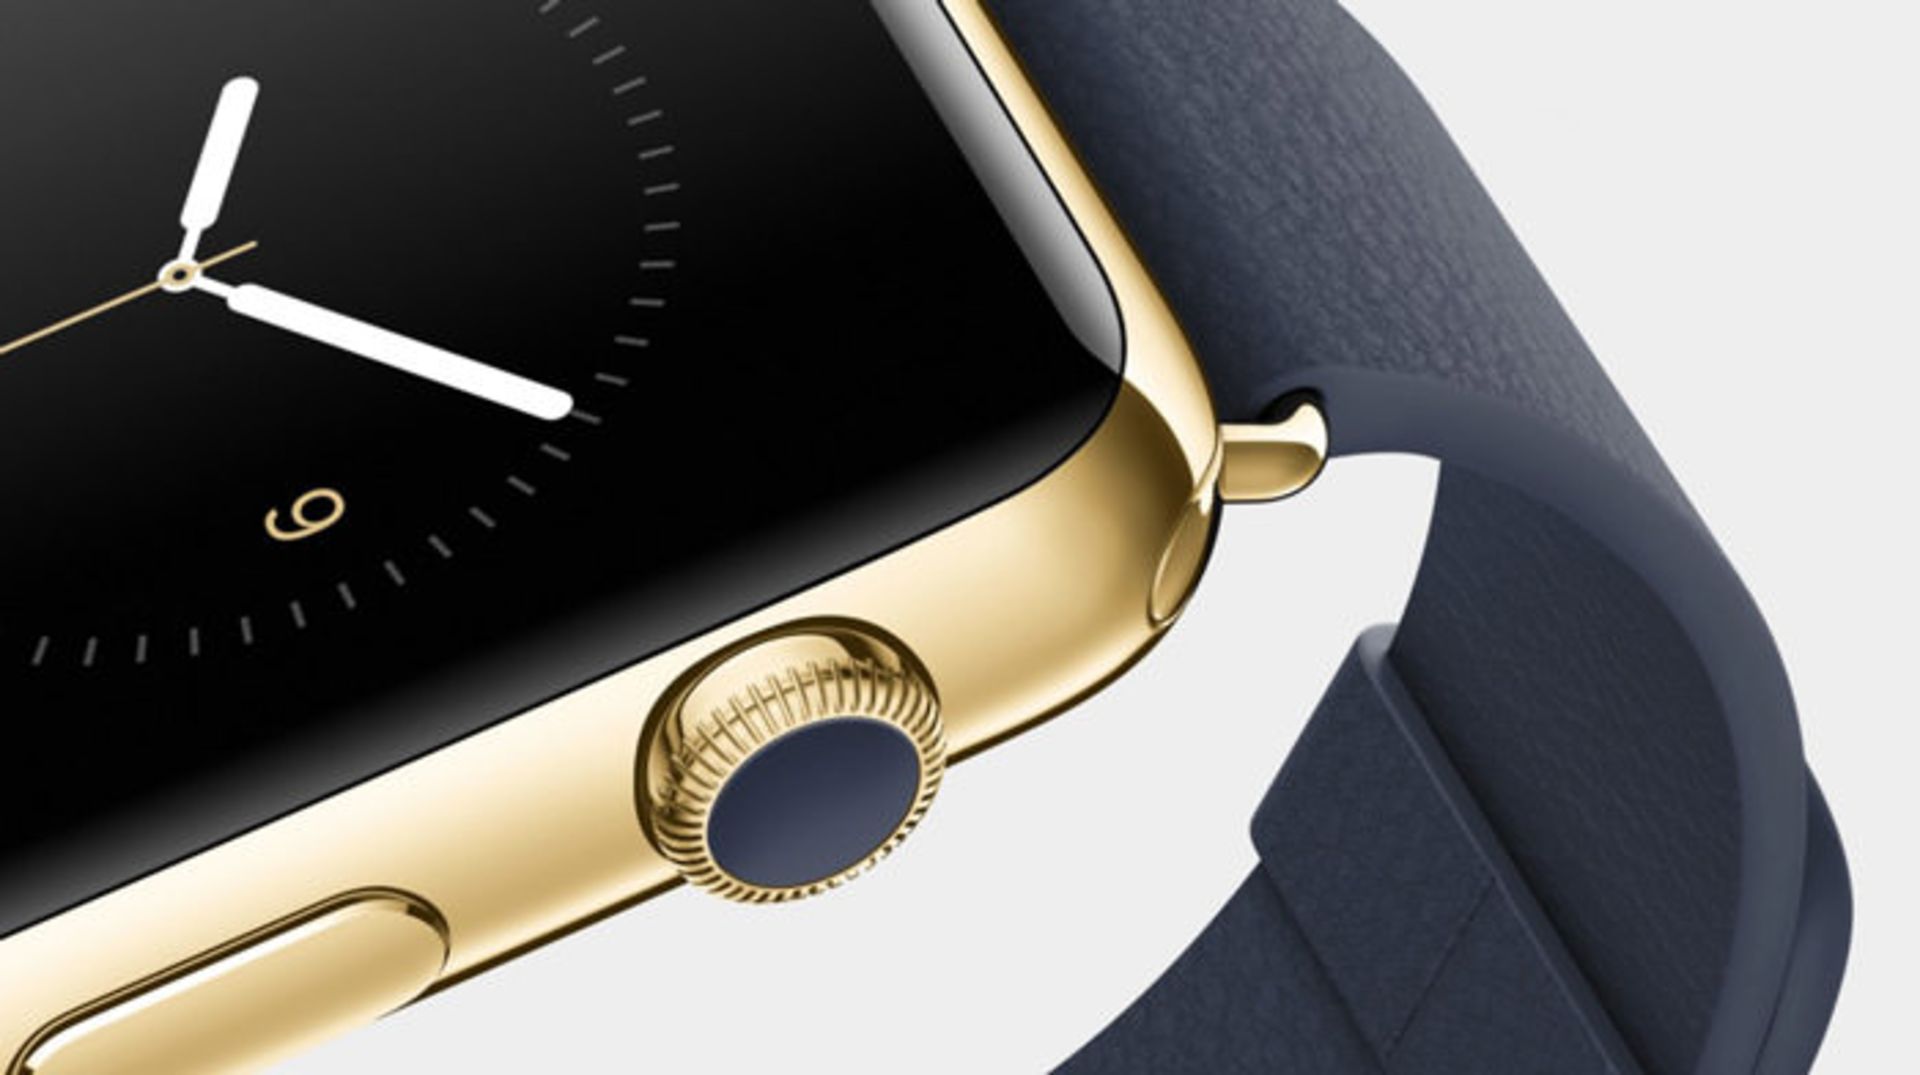 Apple-iPhone-6-Event-Apple-Watch-Gold-1280x716